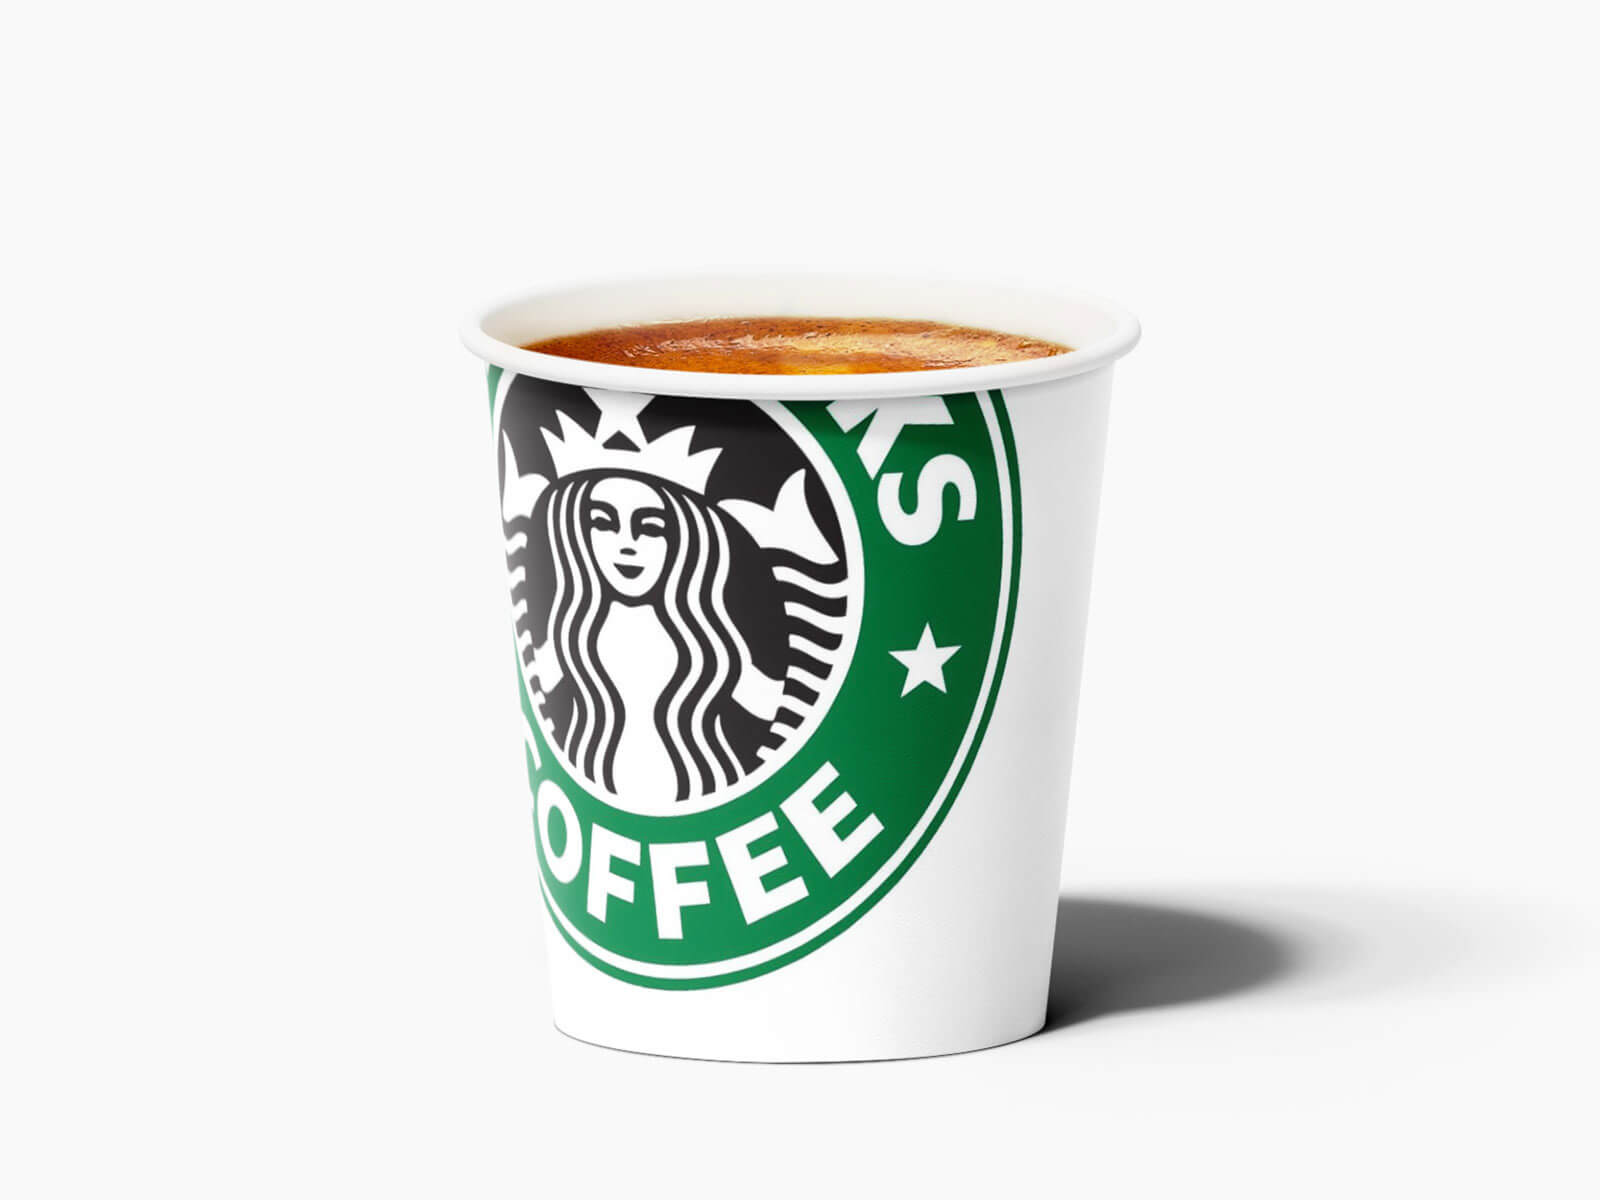 Free-Demi-3-Oz-Small-Paper-Coffee-Cup-Mockup-PSD